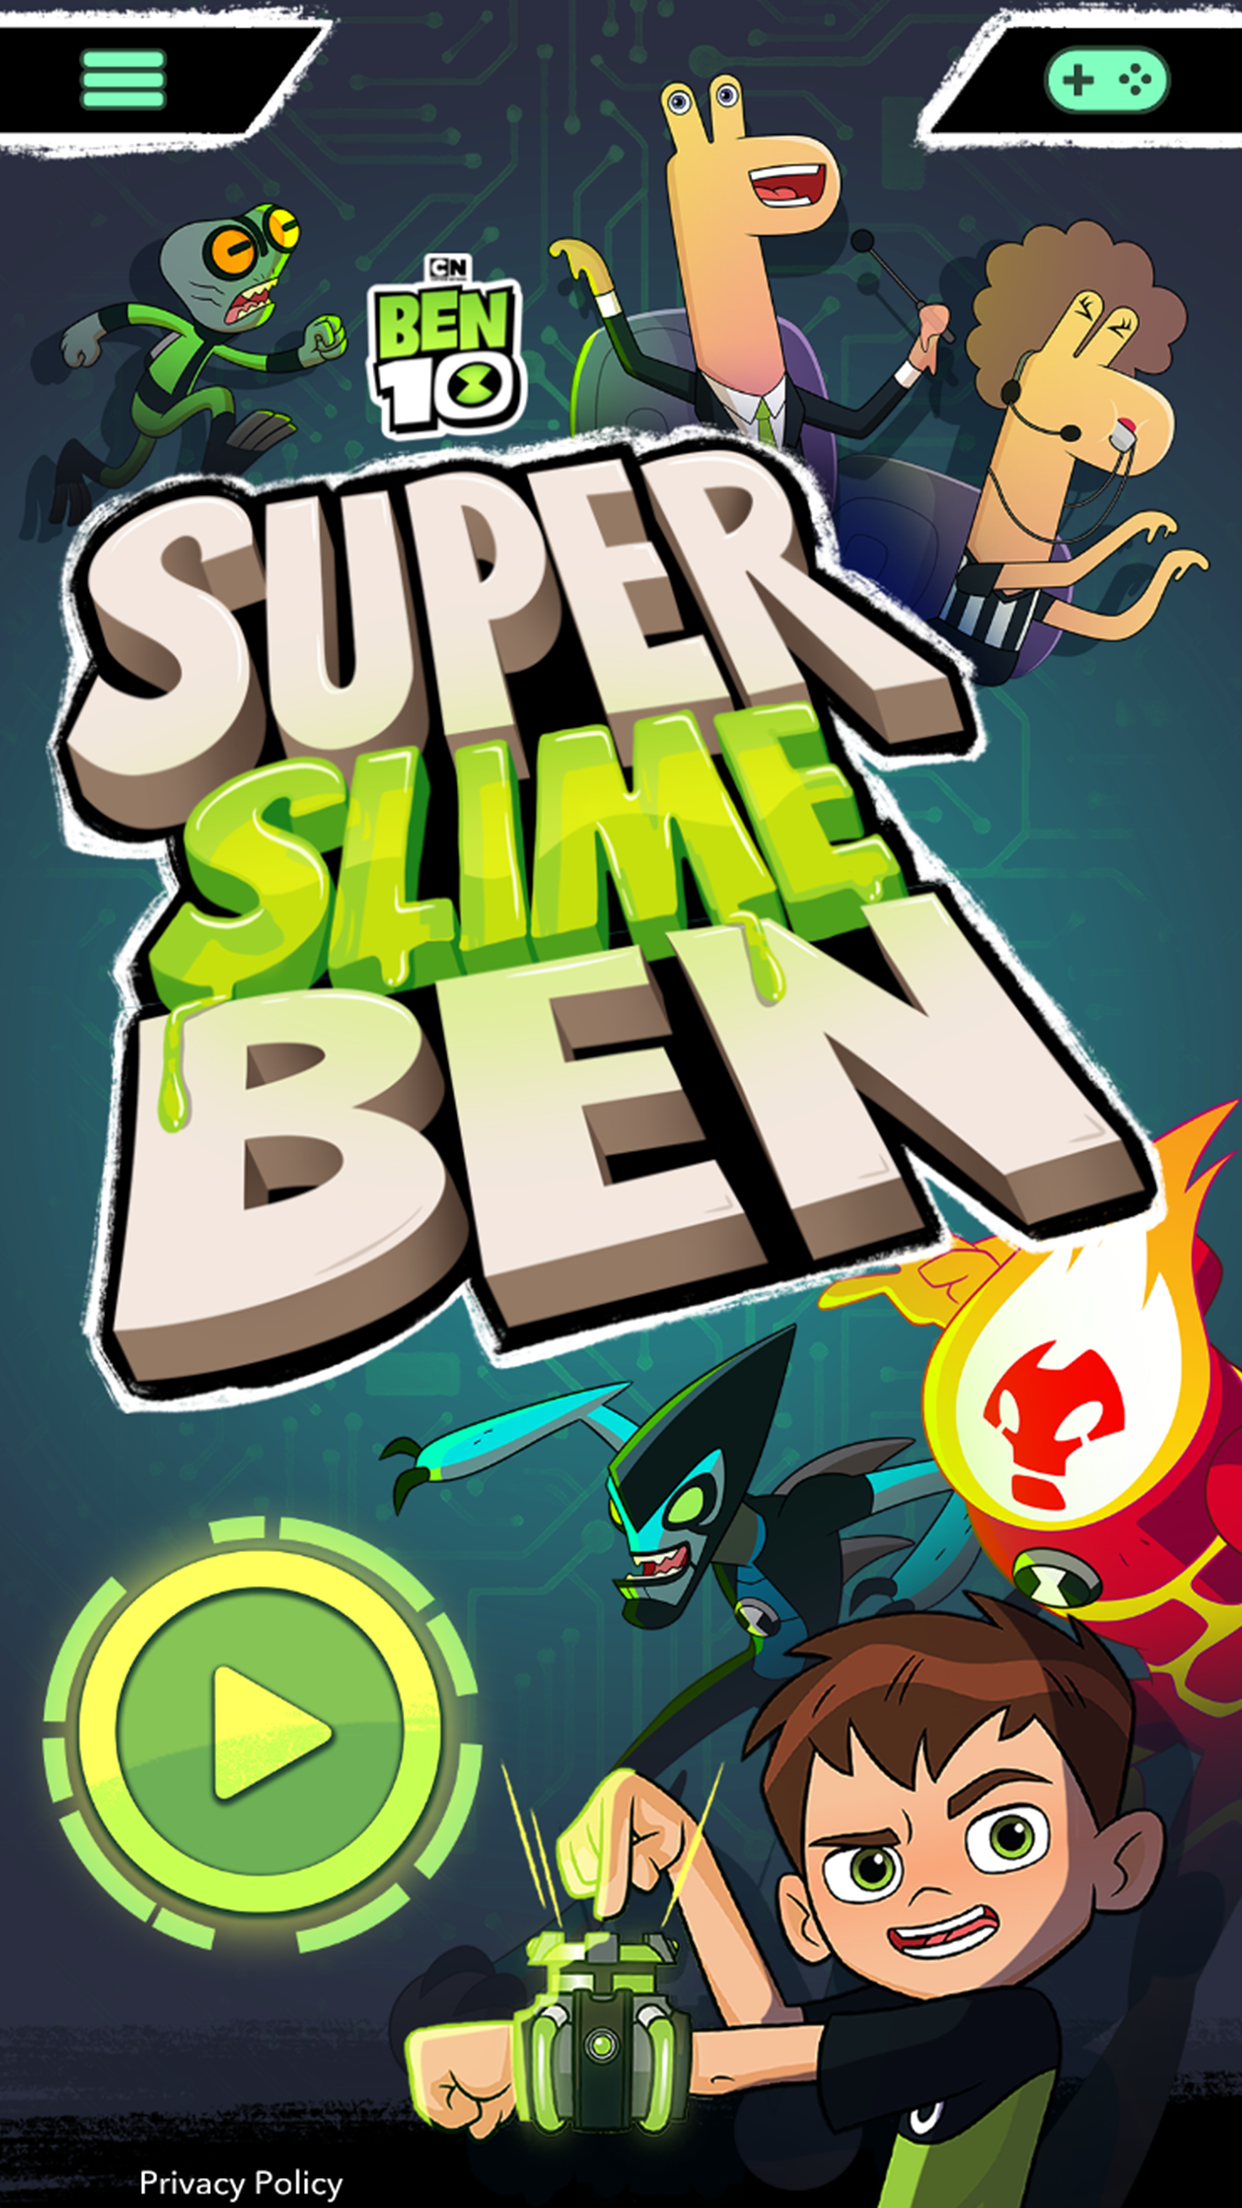 Screenshot 1 of Ben 10 - Super Slime Ben: อาร์เคดปีนป่ายไม่รู้จบ 3.0.0